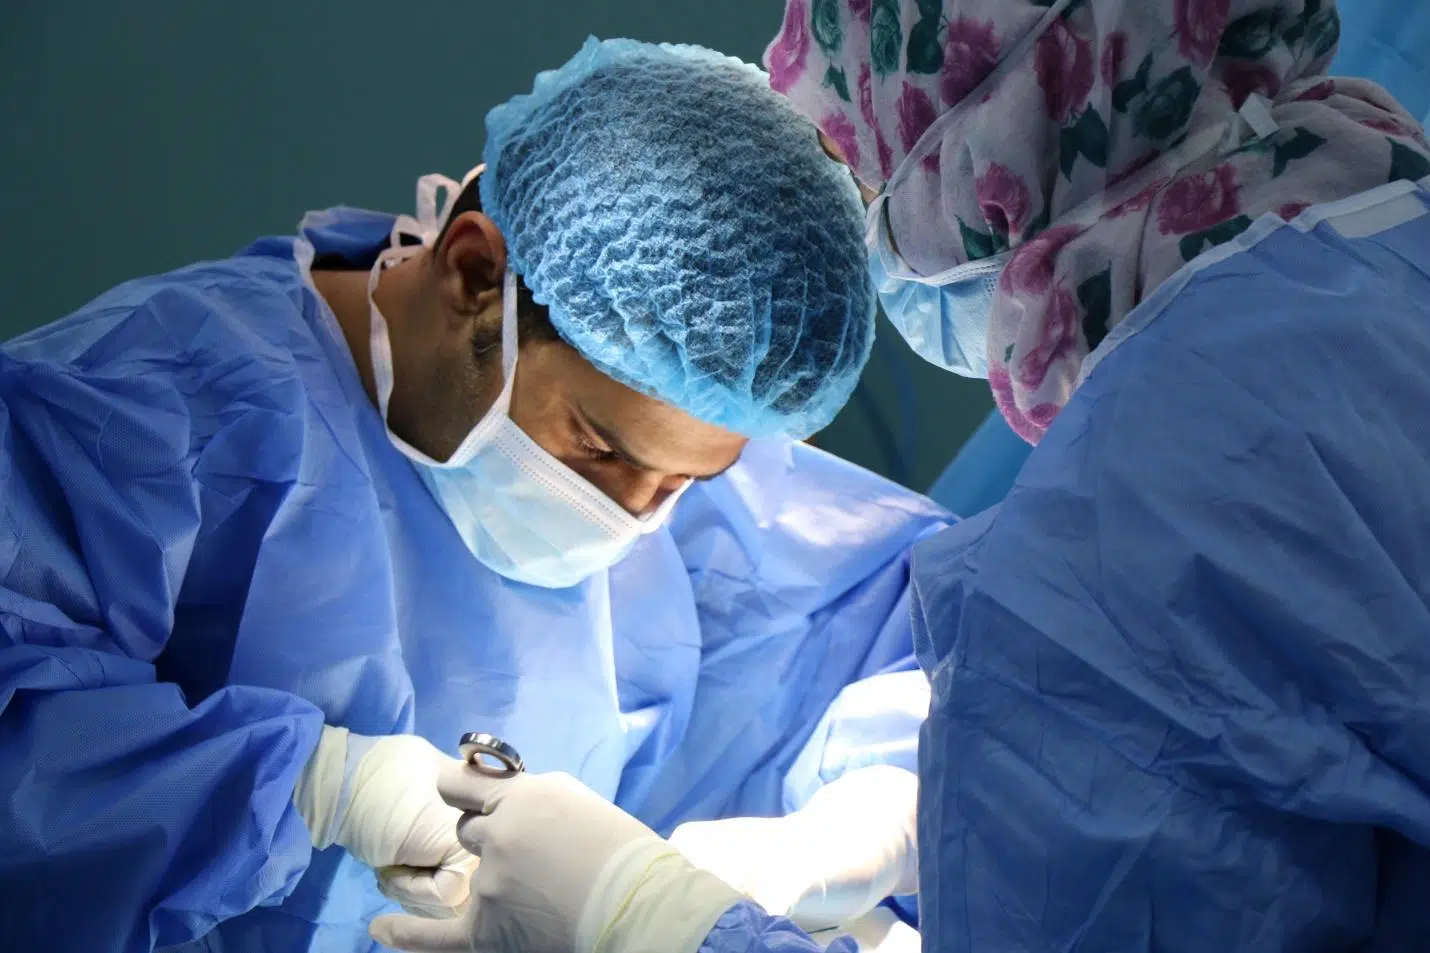 A surgeon performing labiaplast